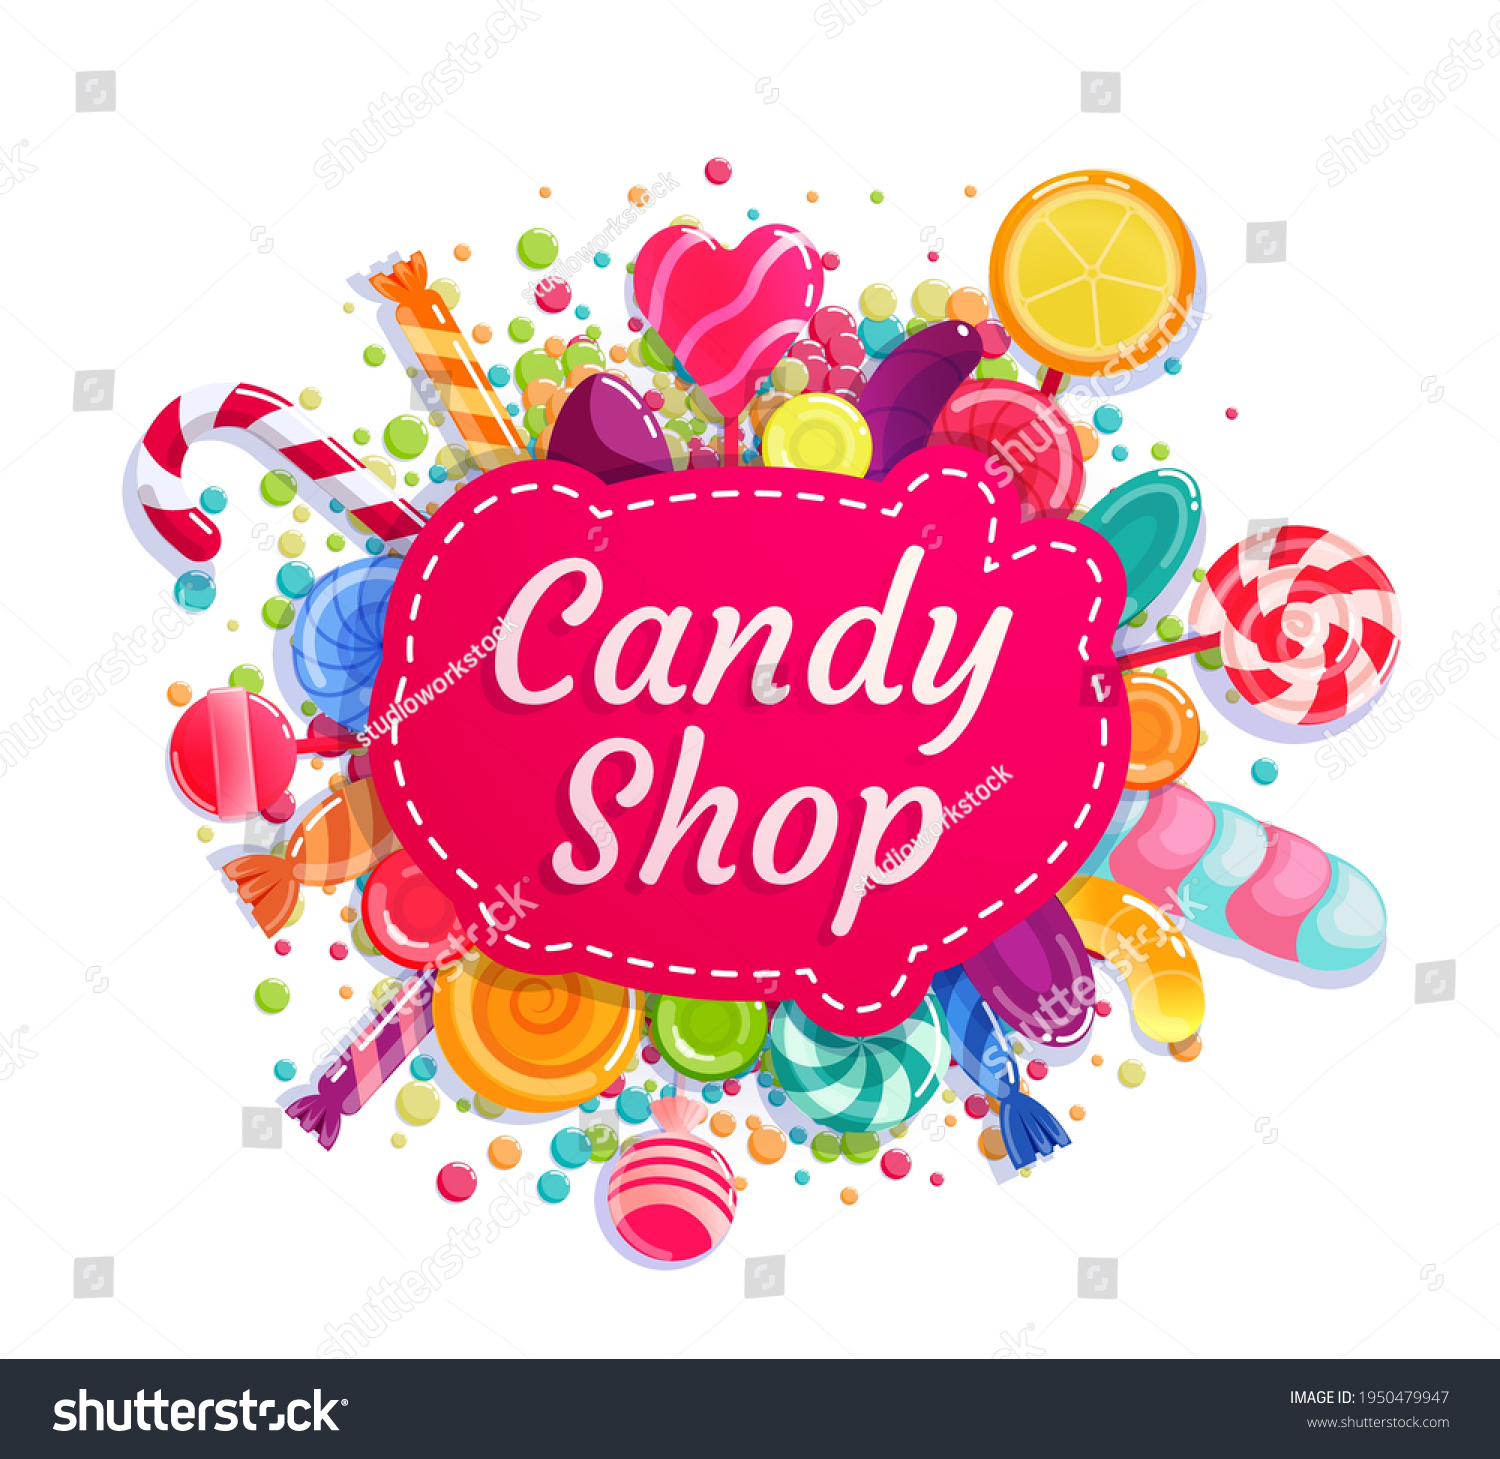 Candy shop 2. Candy shop надпись. Candy shop картинки. Карамель шоп. Candy shop красивая надпись.